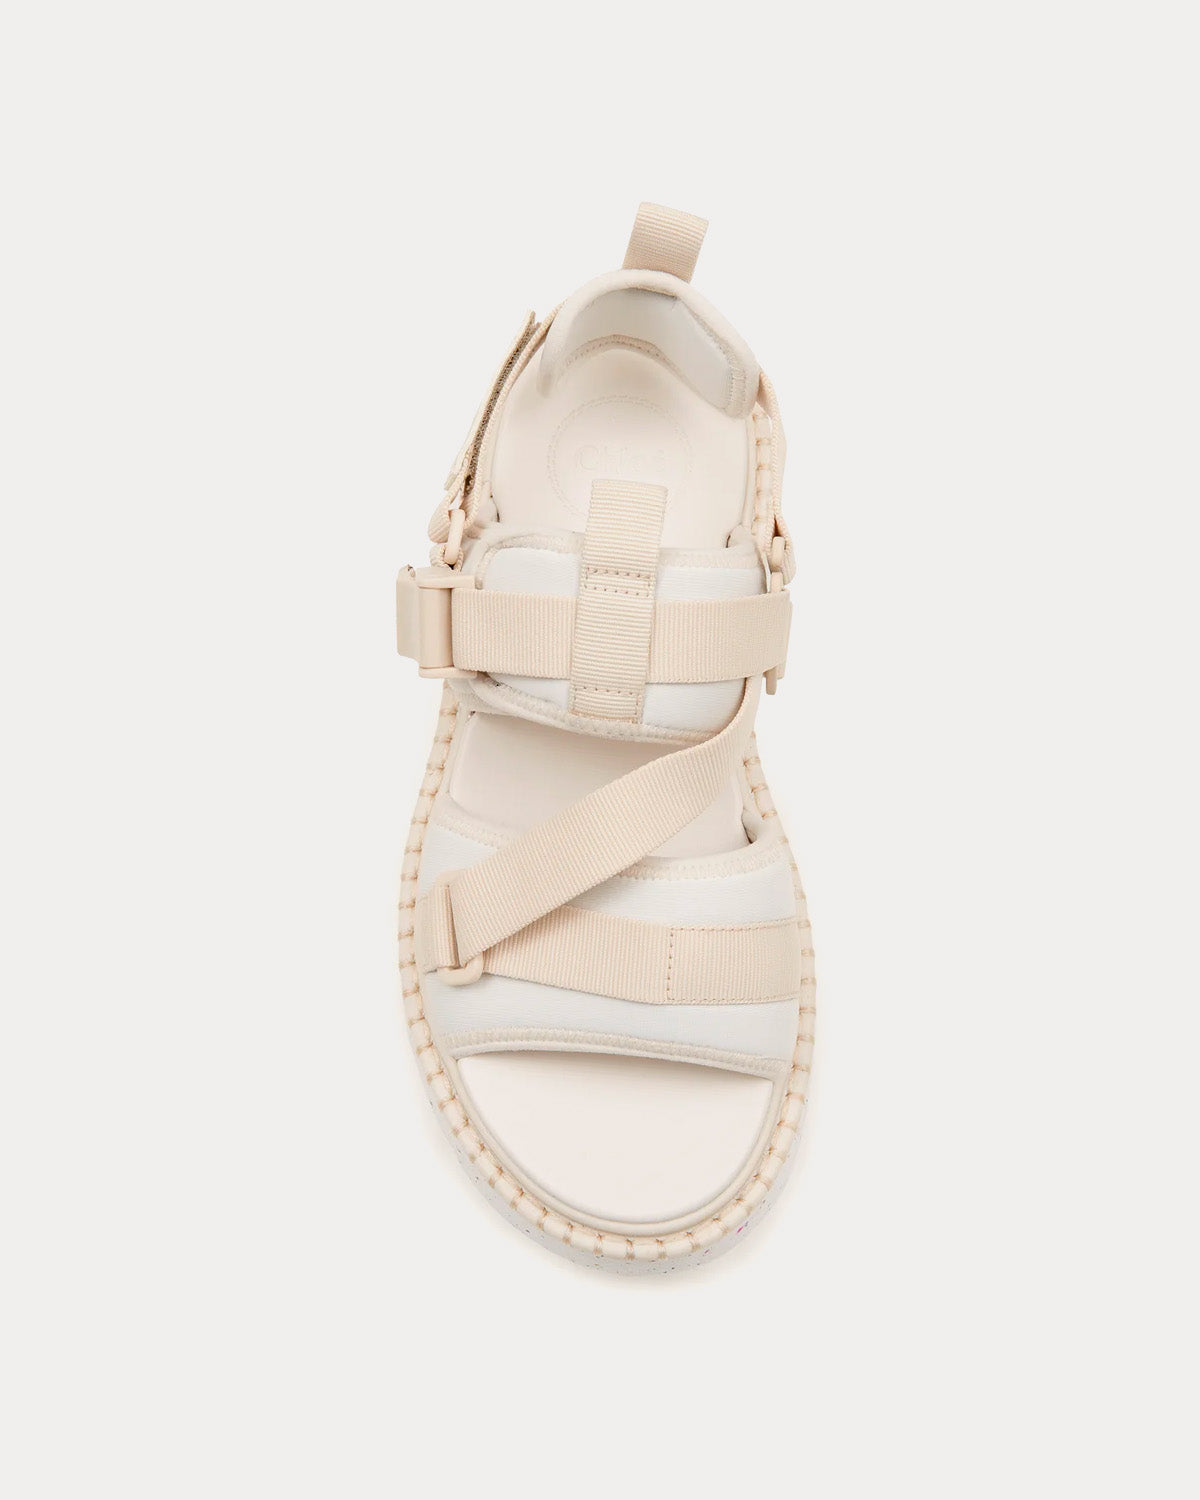 Chloé - Lilli Flat Nomad White Sandals